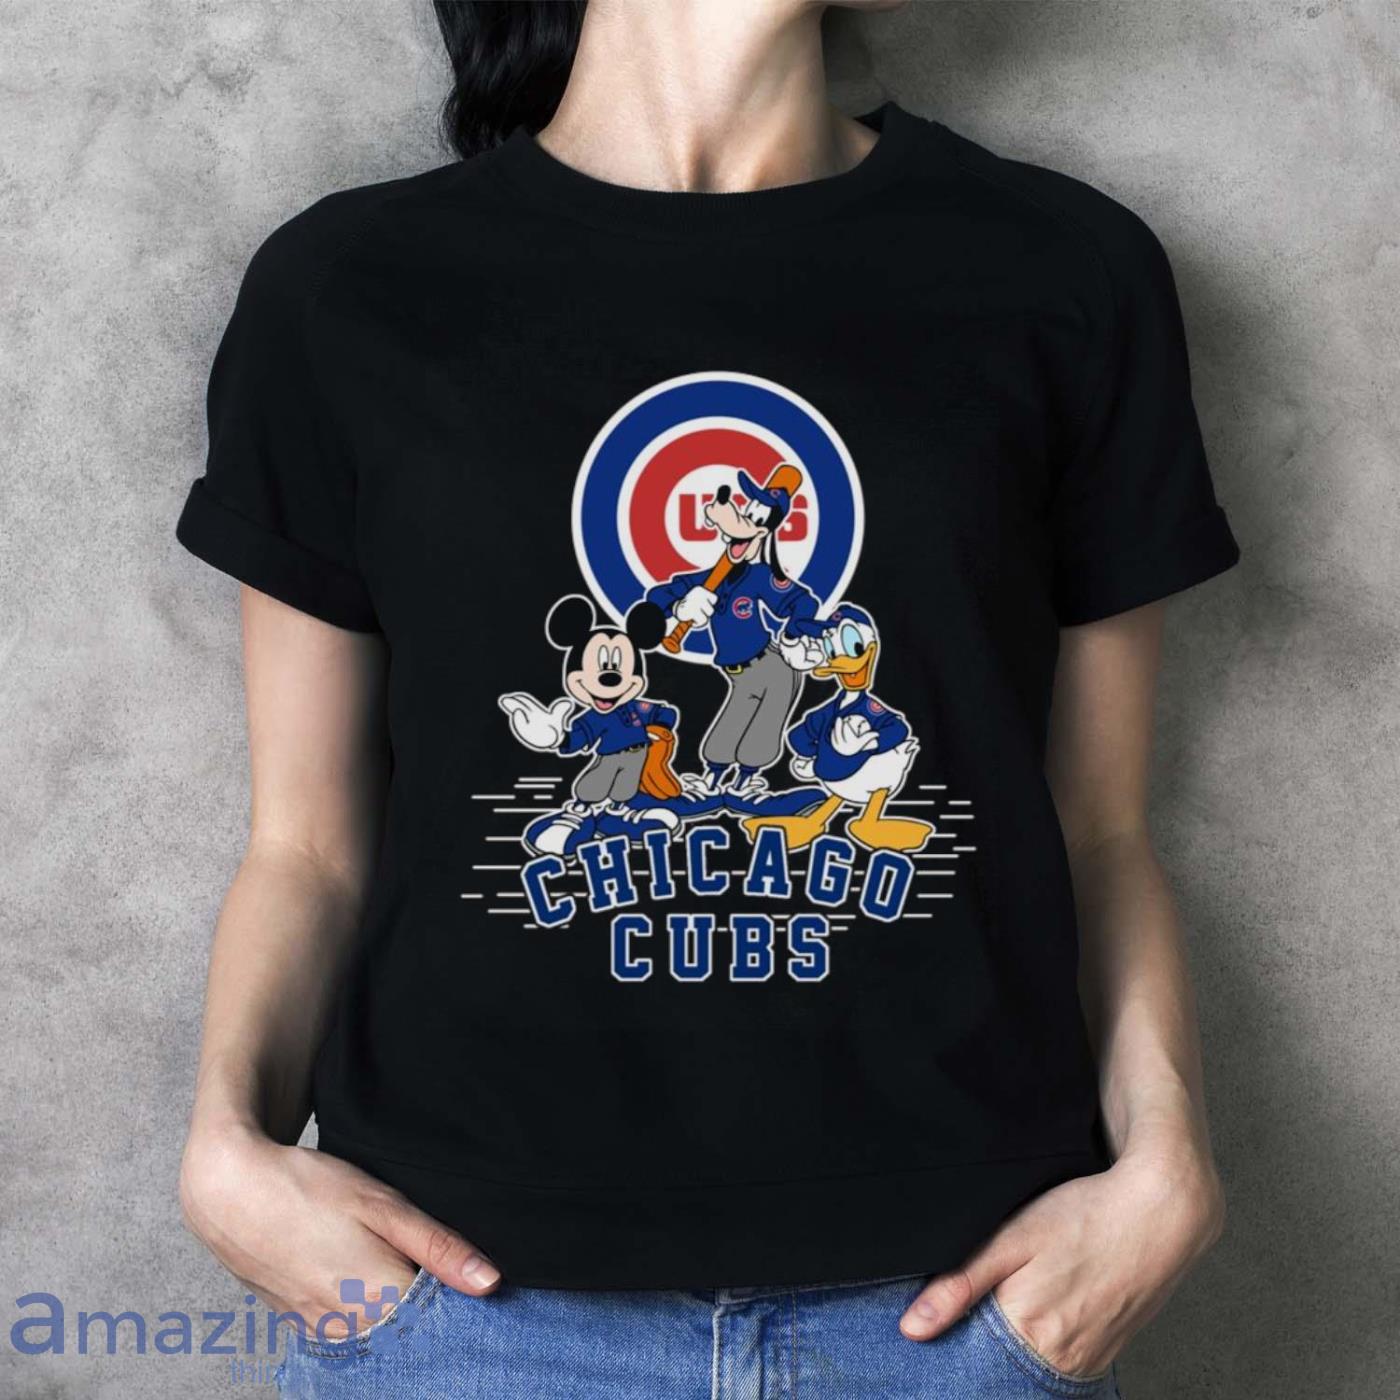 Chicago Cubs Shirt Adult XXXL Grey Blue Disney Mickey Mouse Long